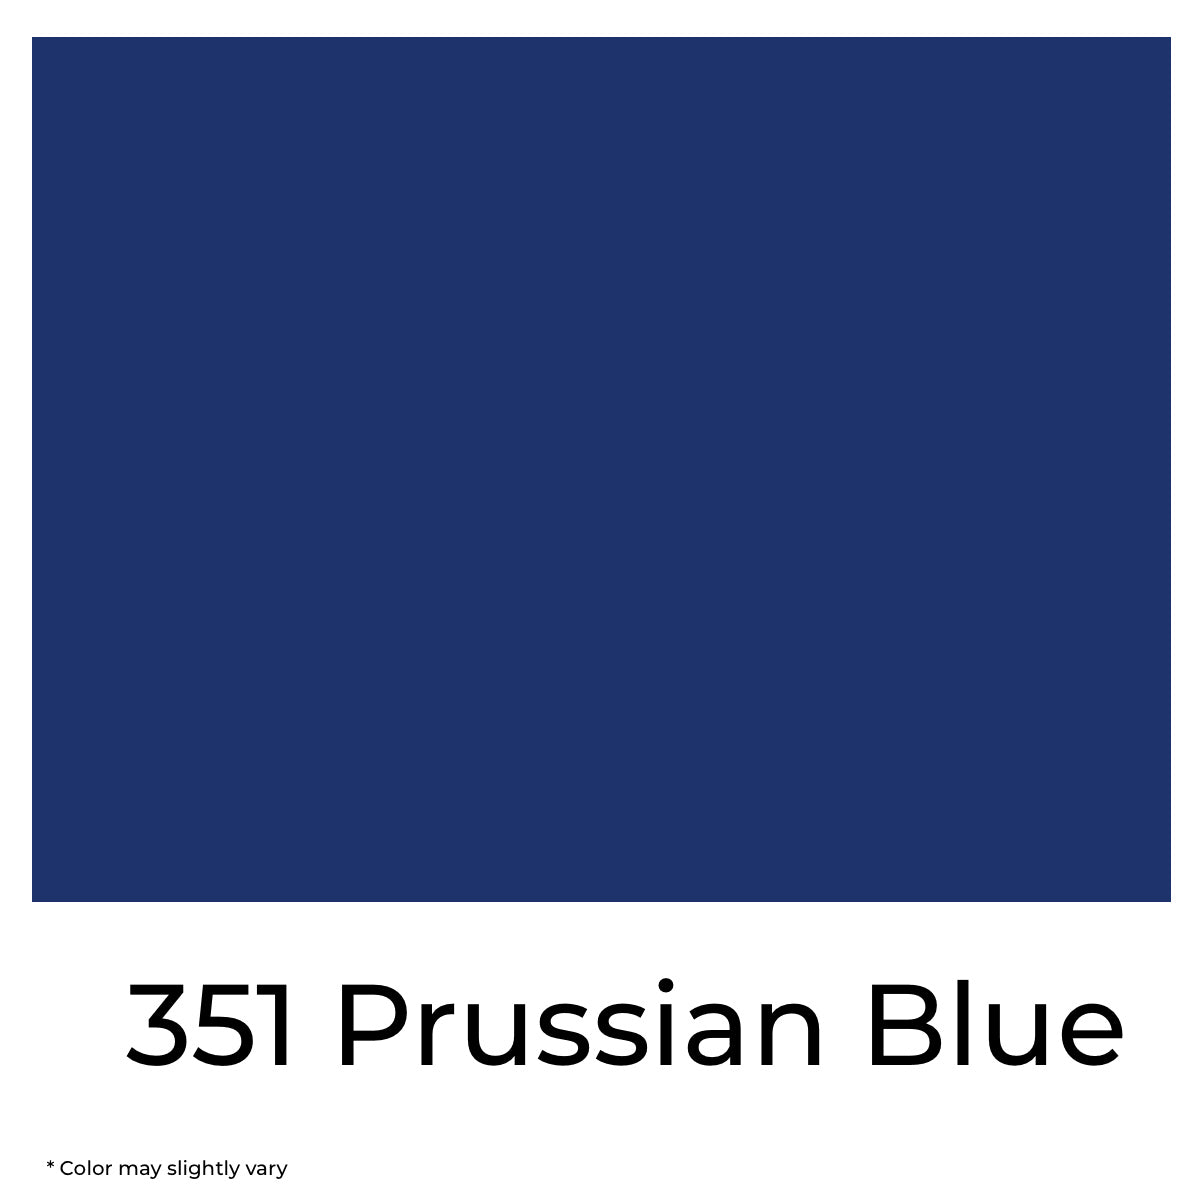 351 Prussian Blue Acrylic Color Tube From Najmaonline - Abu Dhabi, Dubai - UAE